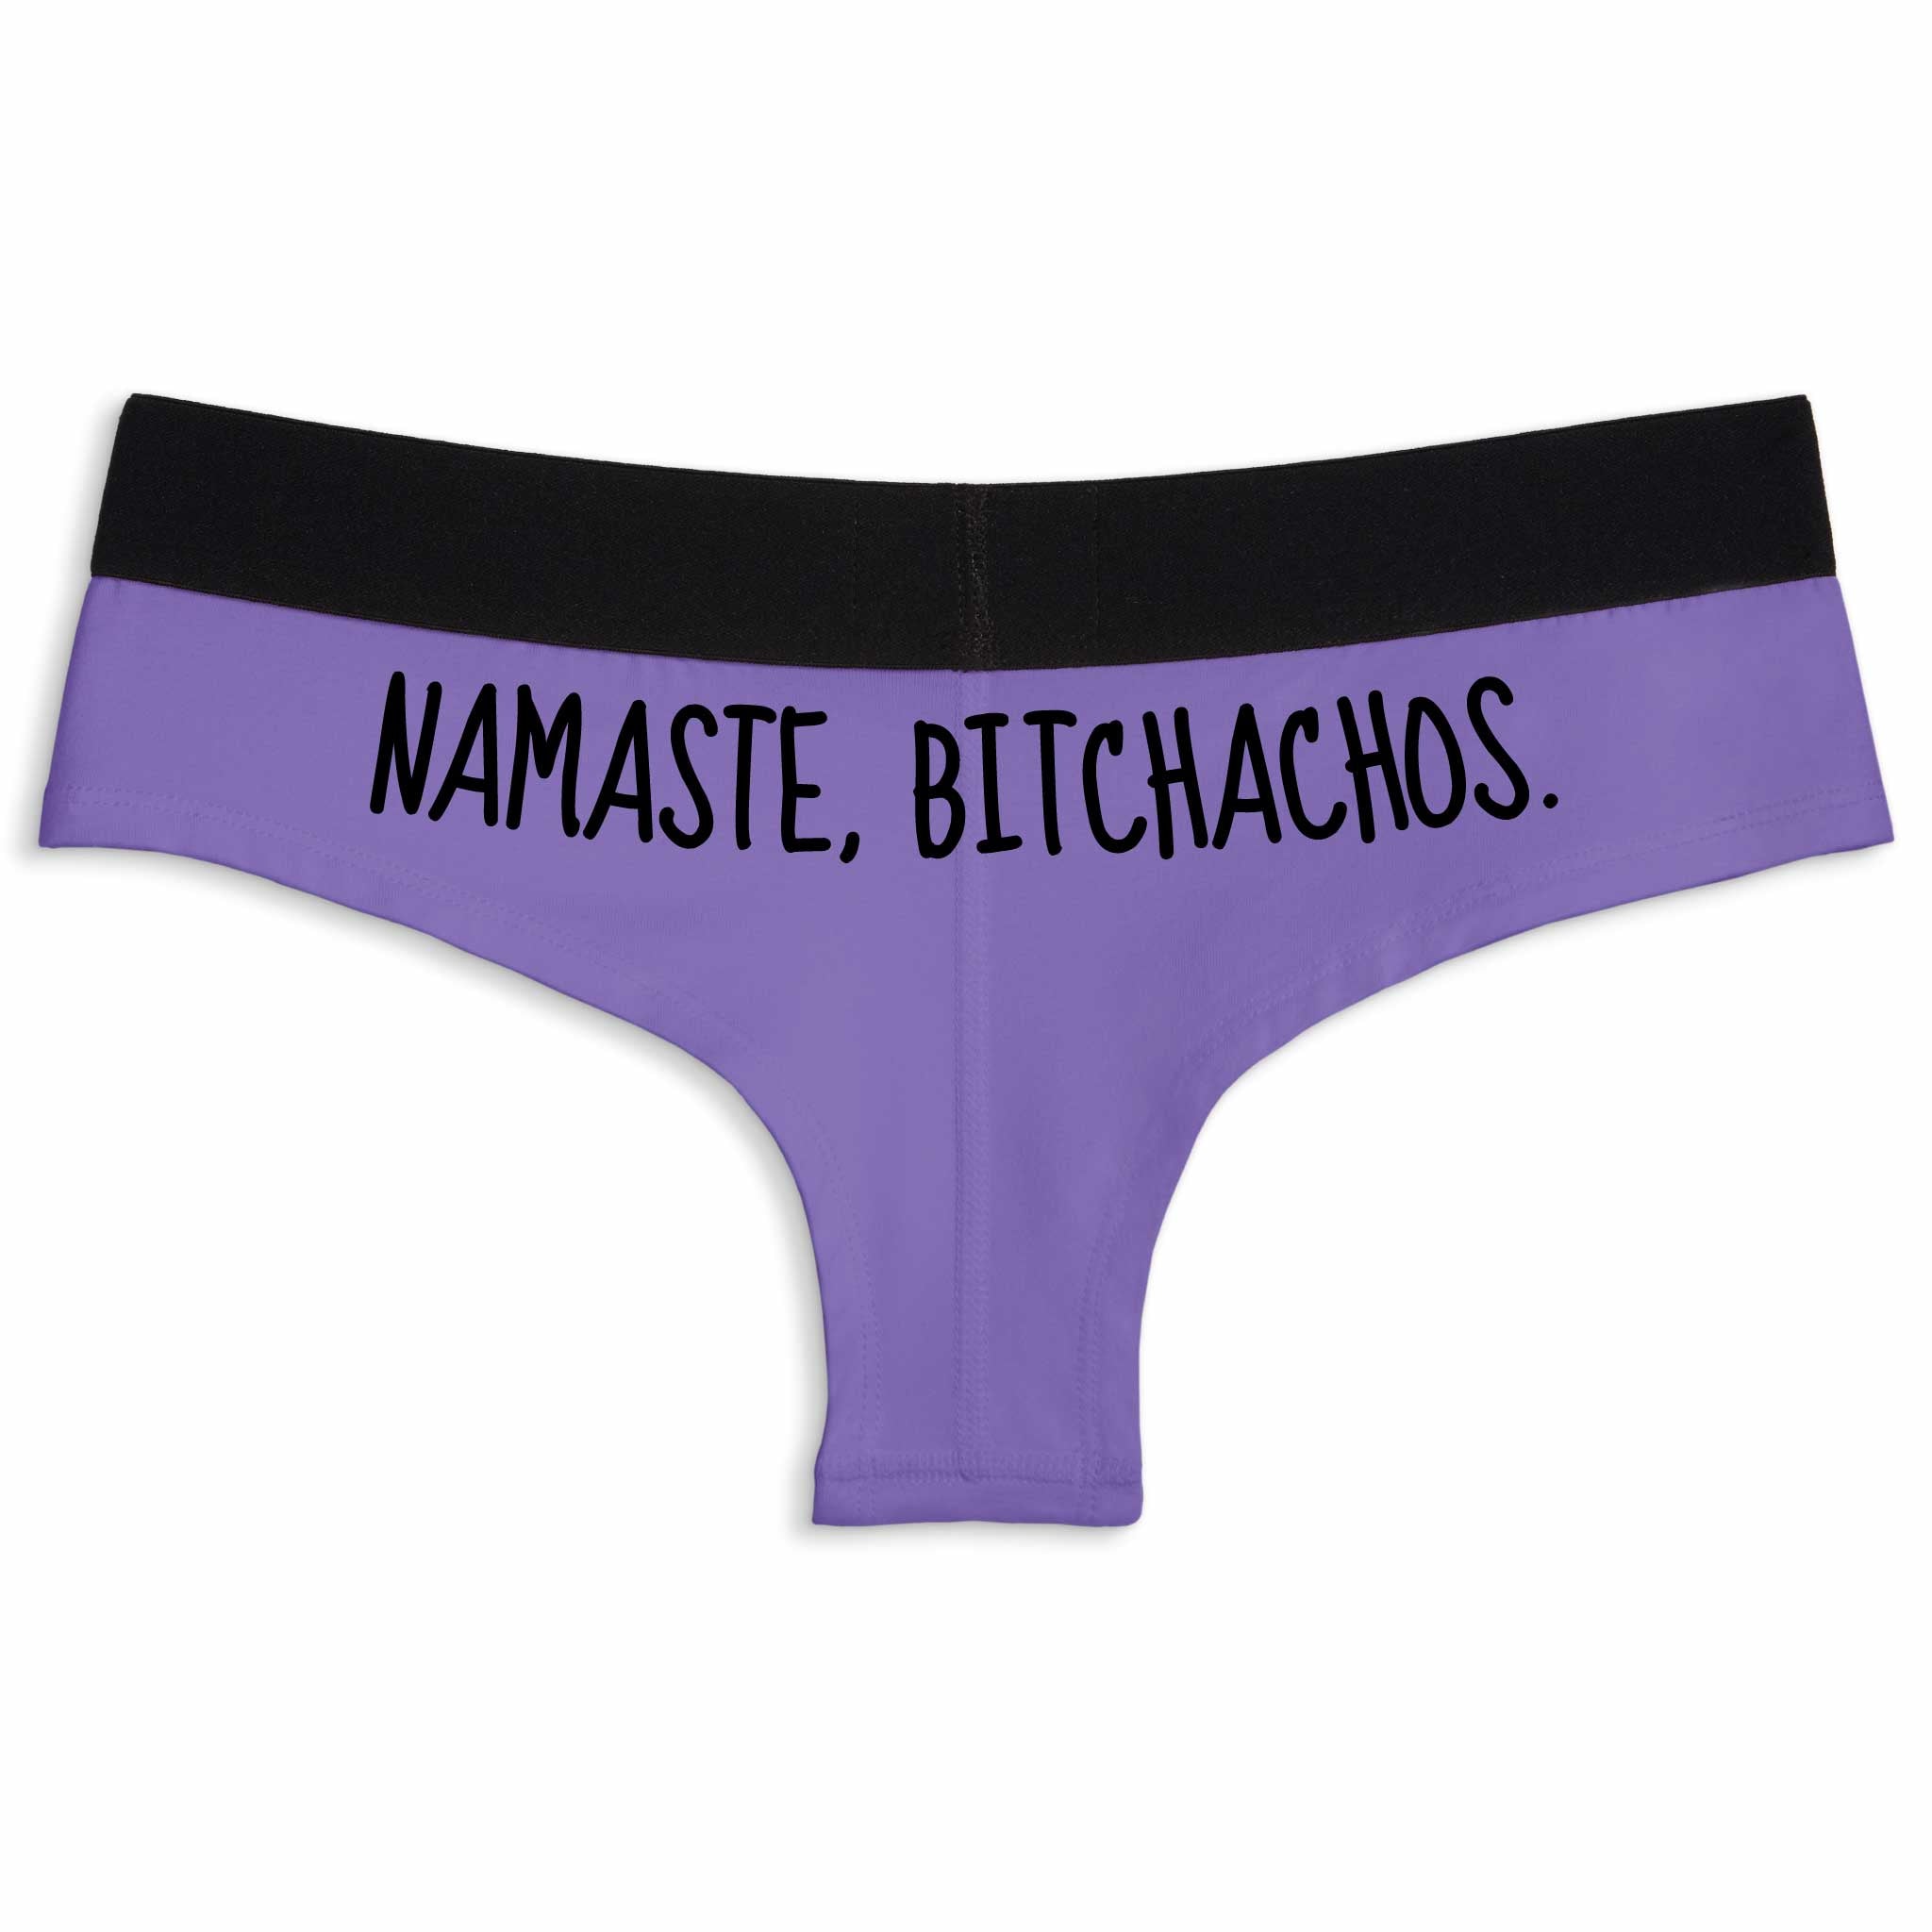 Namaste, Bitchachos. | Cheeky